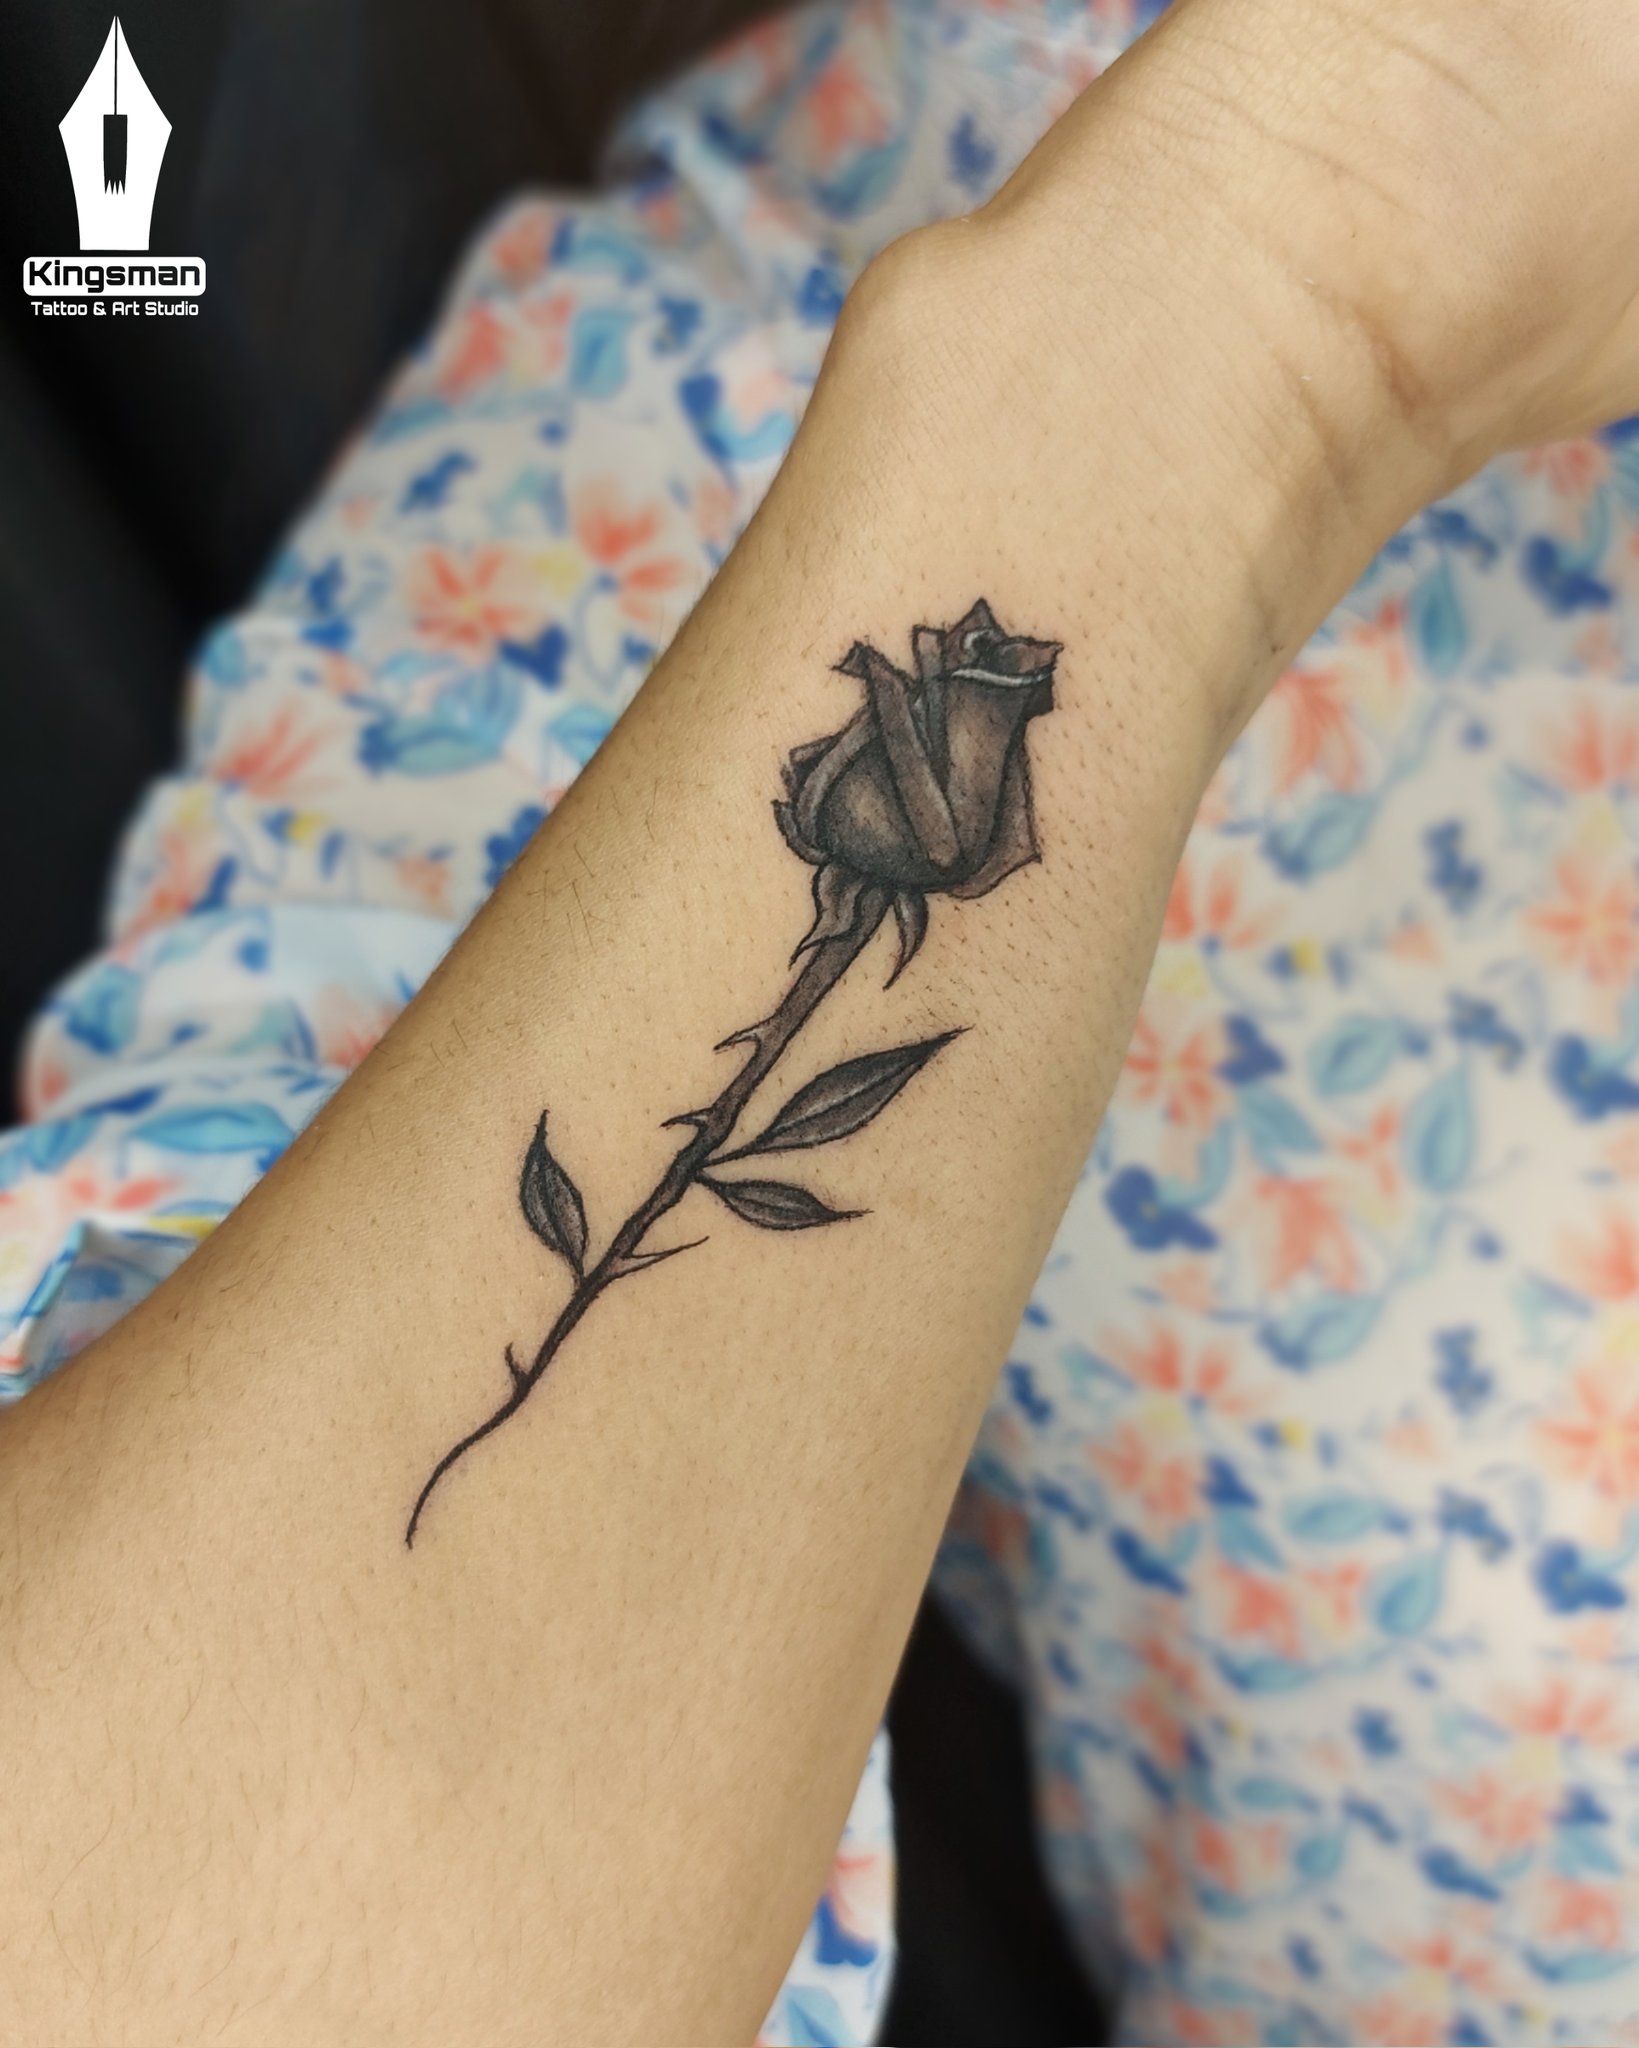 Simple rose tattoo today #rosetattoo | Instagram